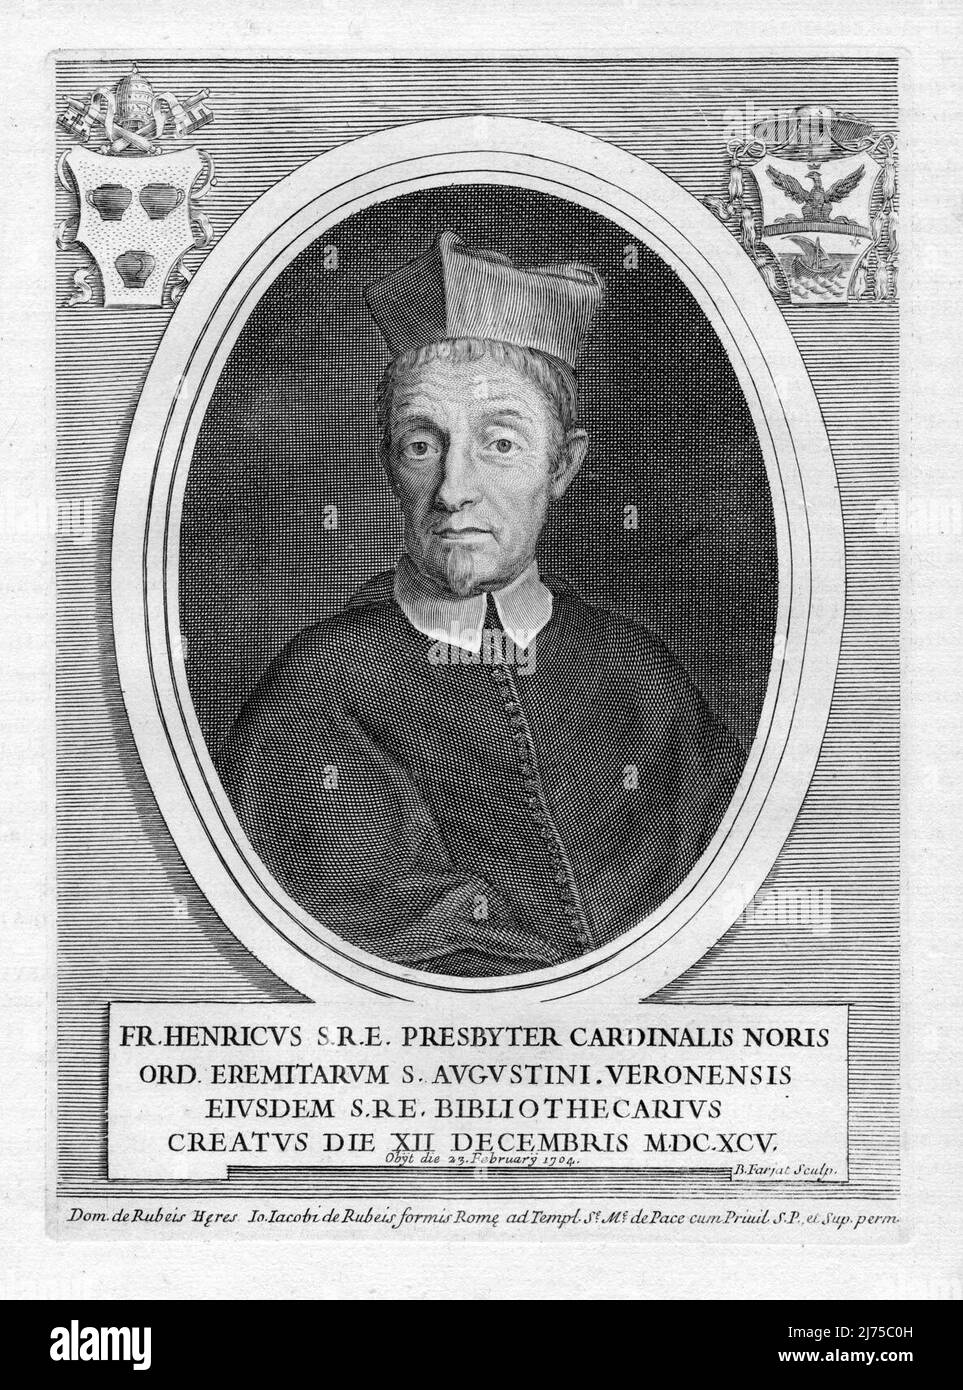 Henry Noris (29 August 1631 – 23 February 1704), or Enrico Noris, was an Italian church historian, theologian and Cardinal. Stock Photo